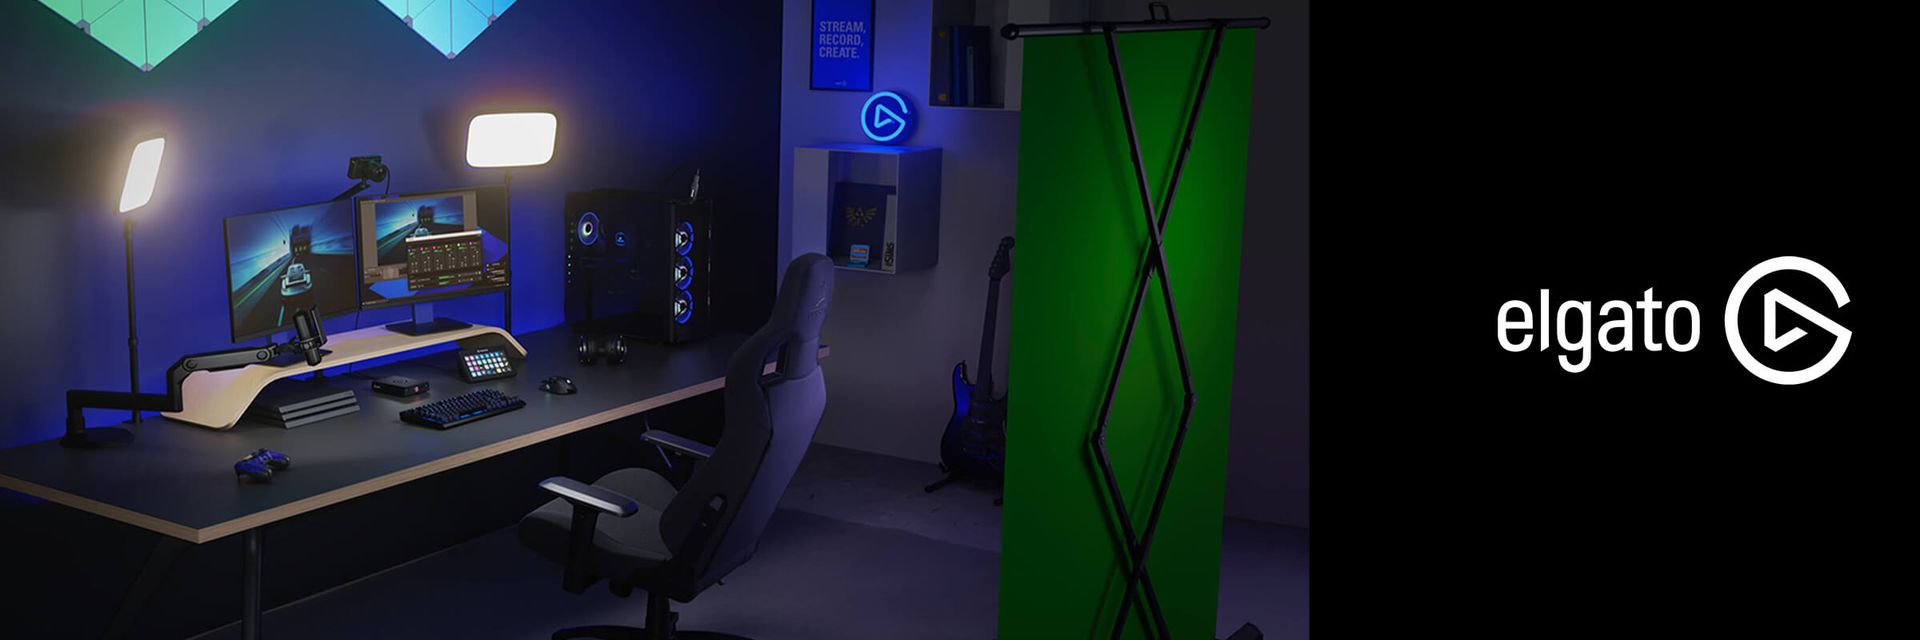 studio de streaming et logo de la marque elgato